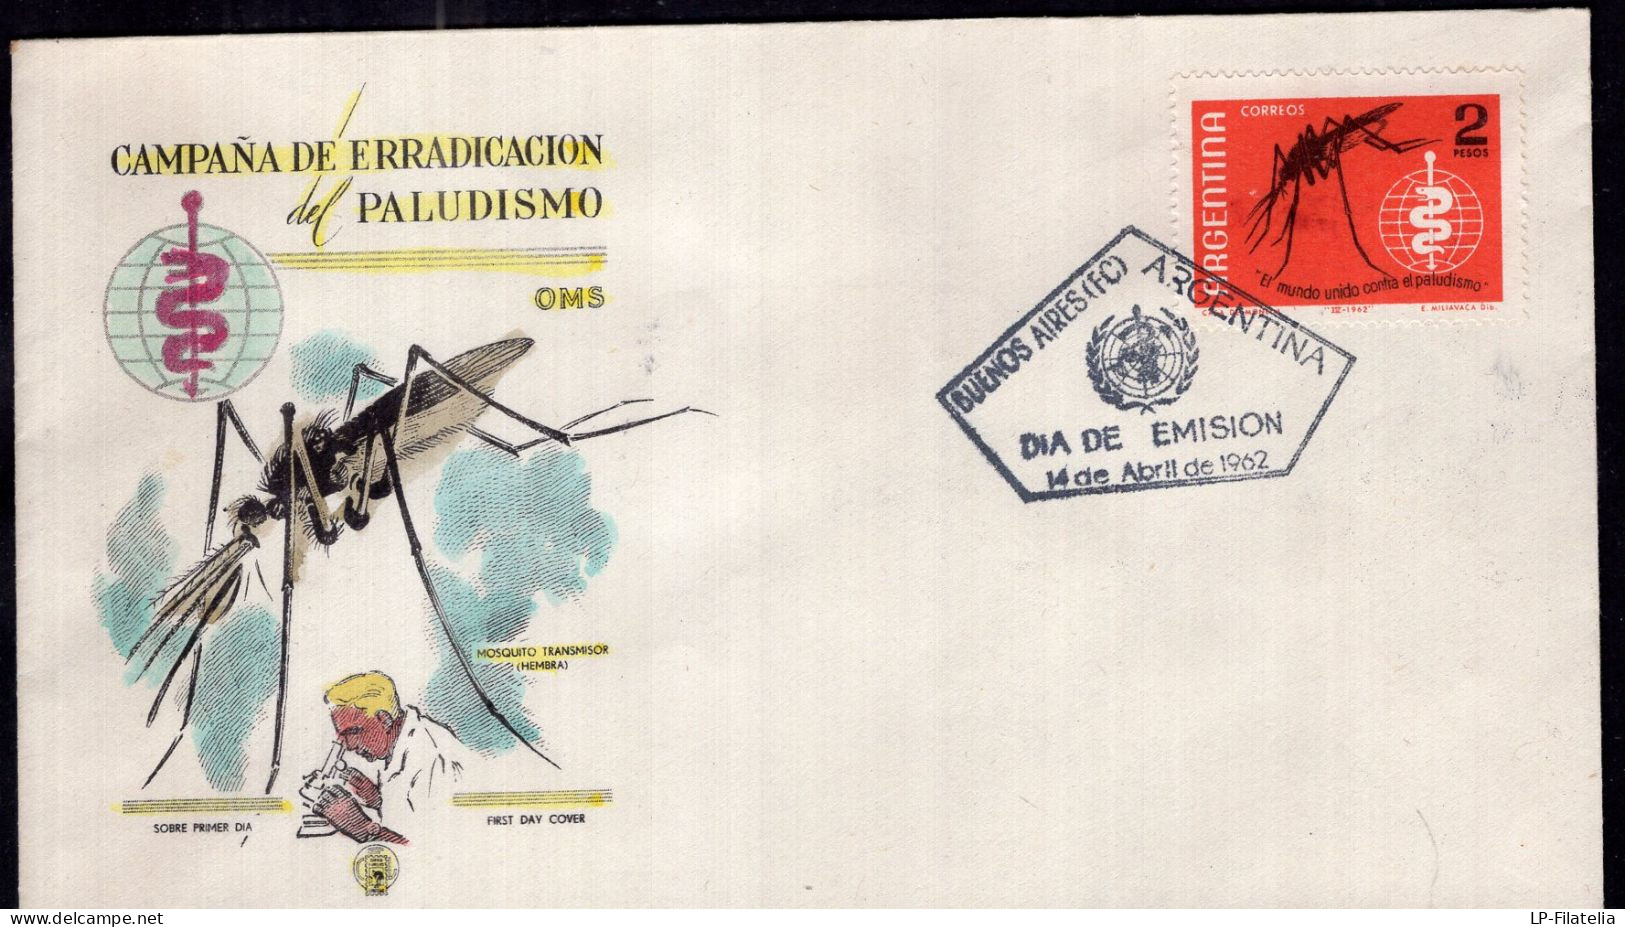 Argentina - 1962 - FDC - Paludism - Malaria Eradication Campaign - Disease